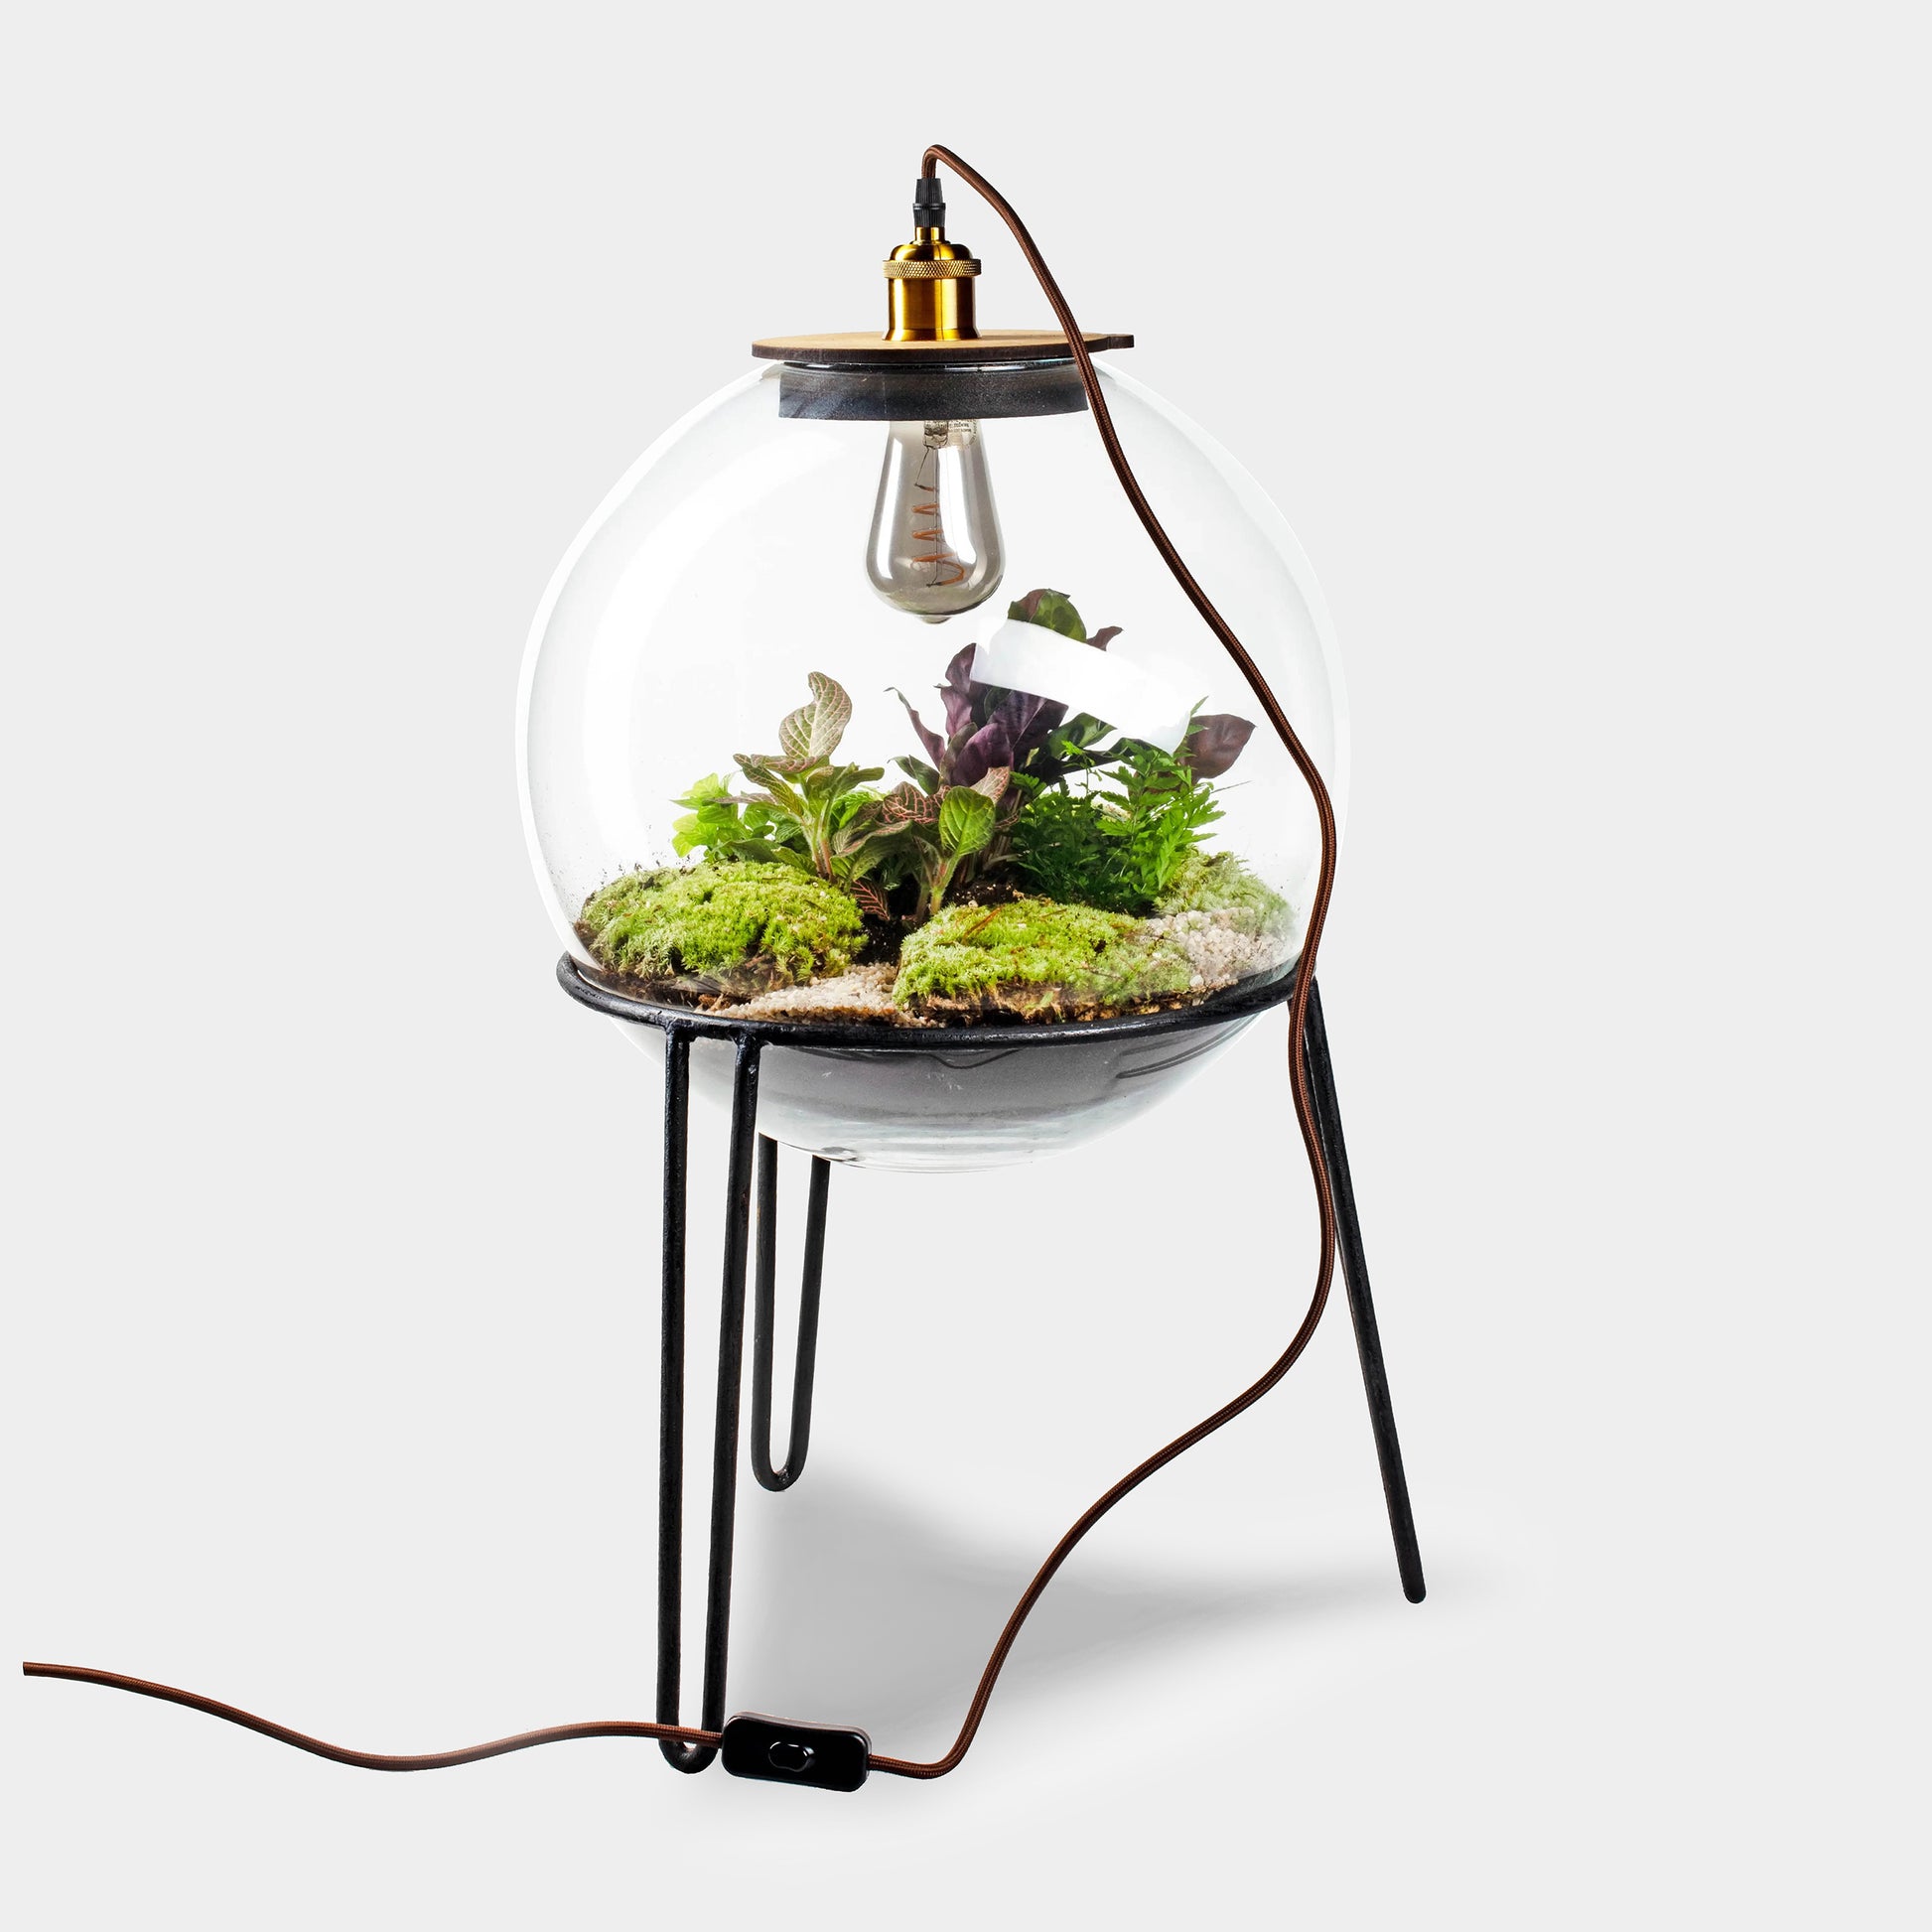 Demeter Botanical incl. standaard - Terrarium met lamp - 60cm - [shop_vendor] - Demeter Botanical incl. standaard - Terrarium met lamp - 60cm - Atelier